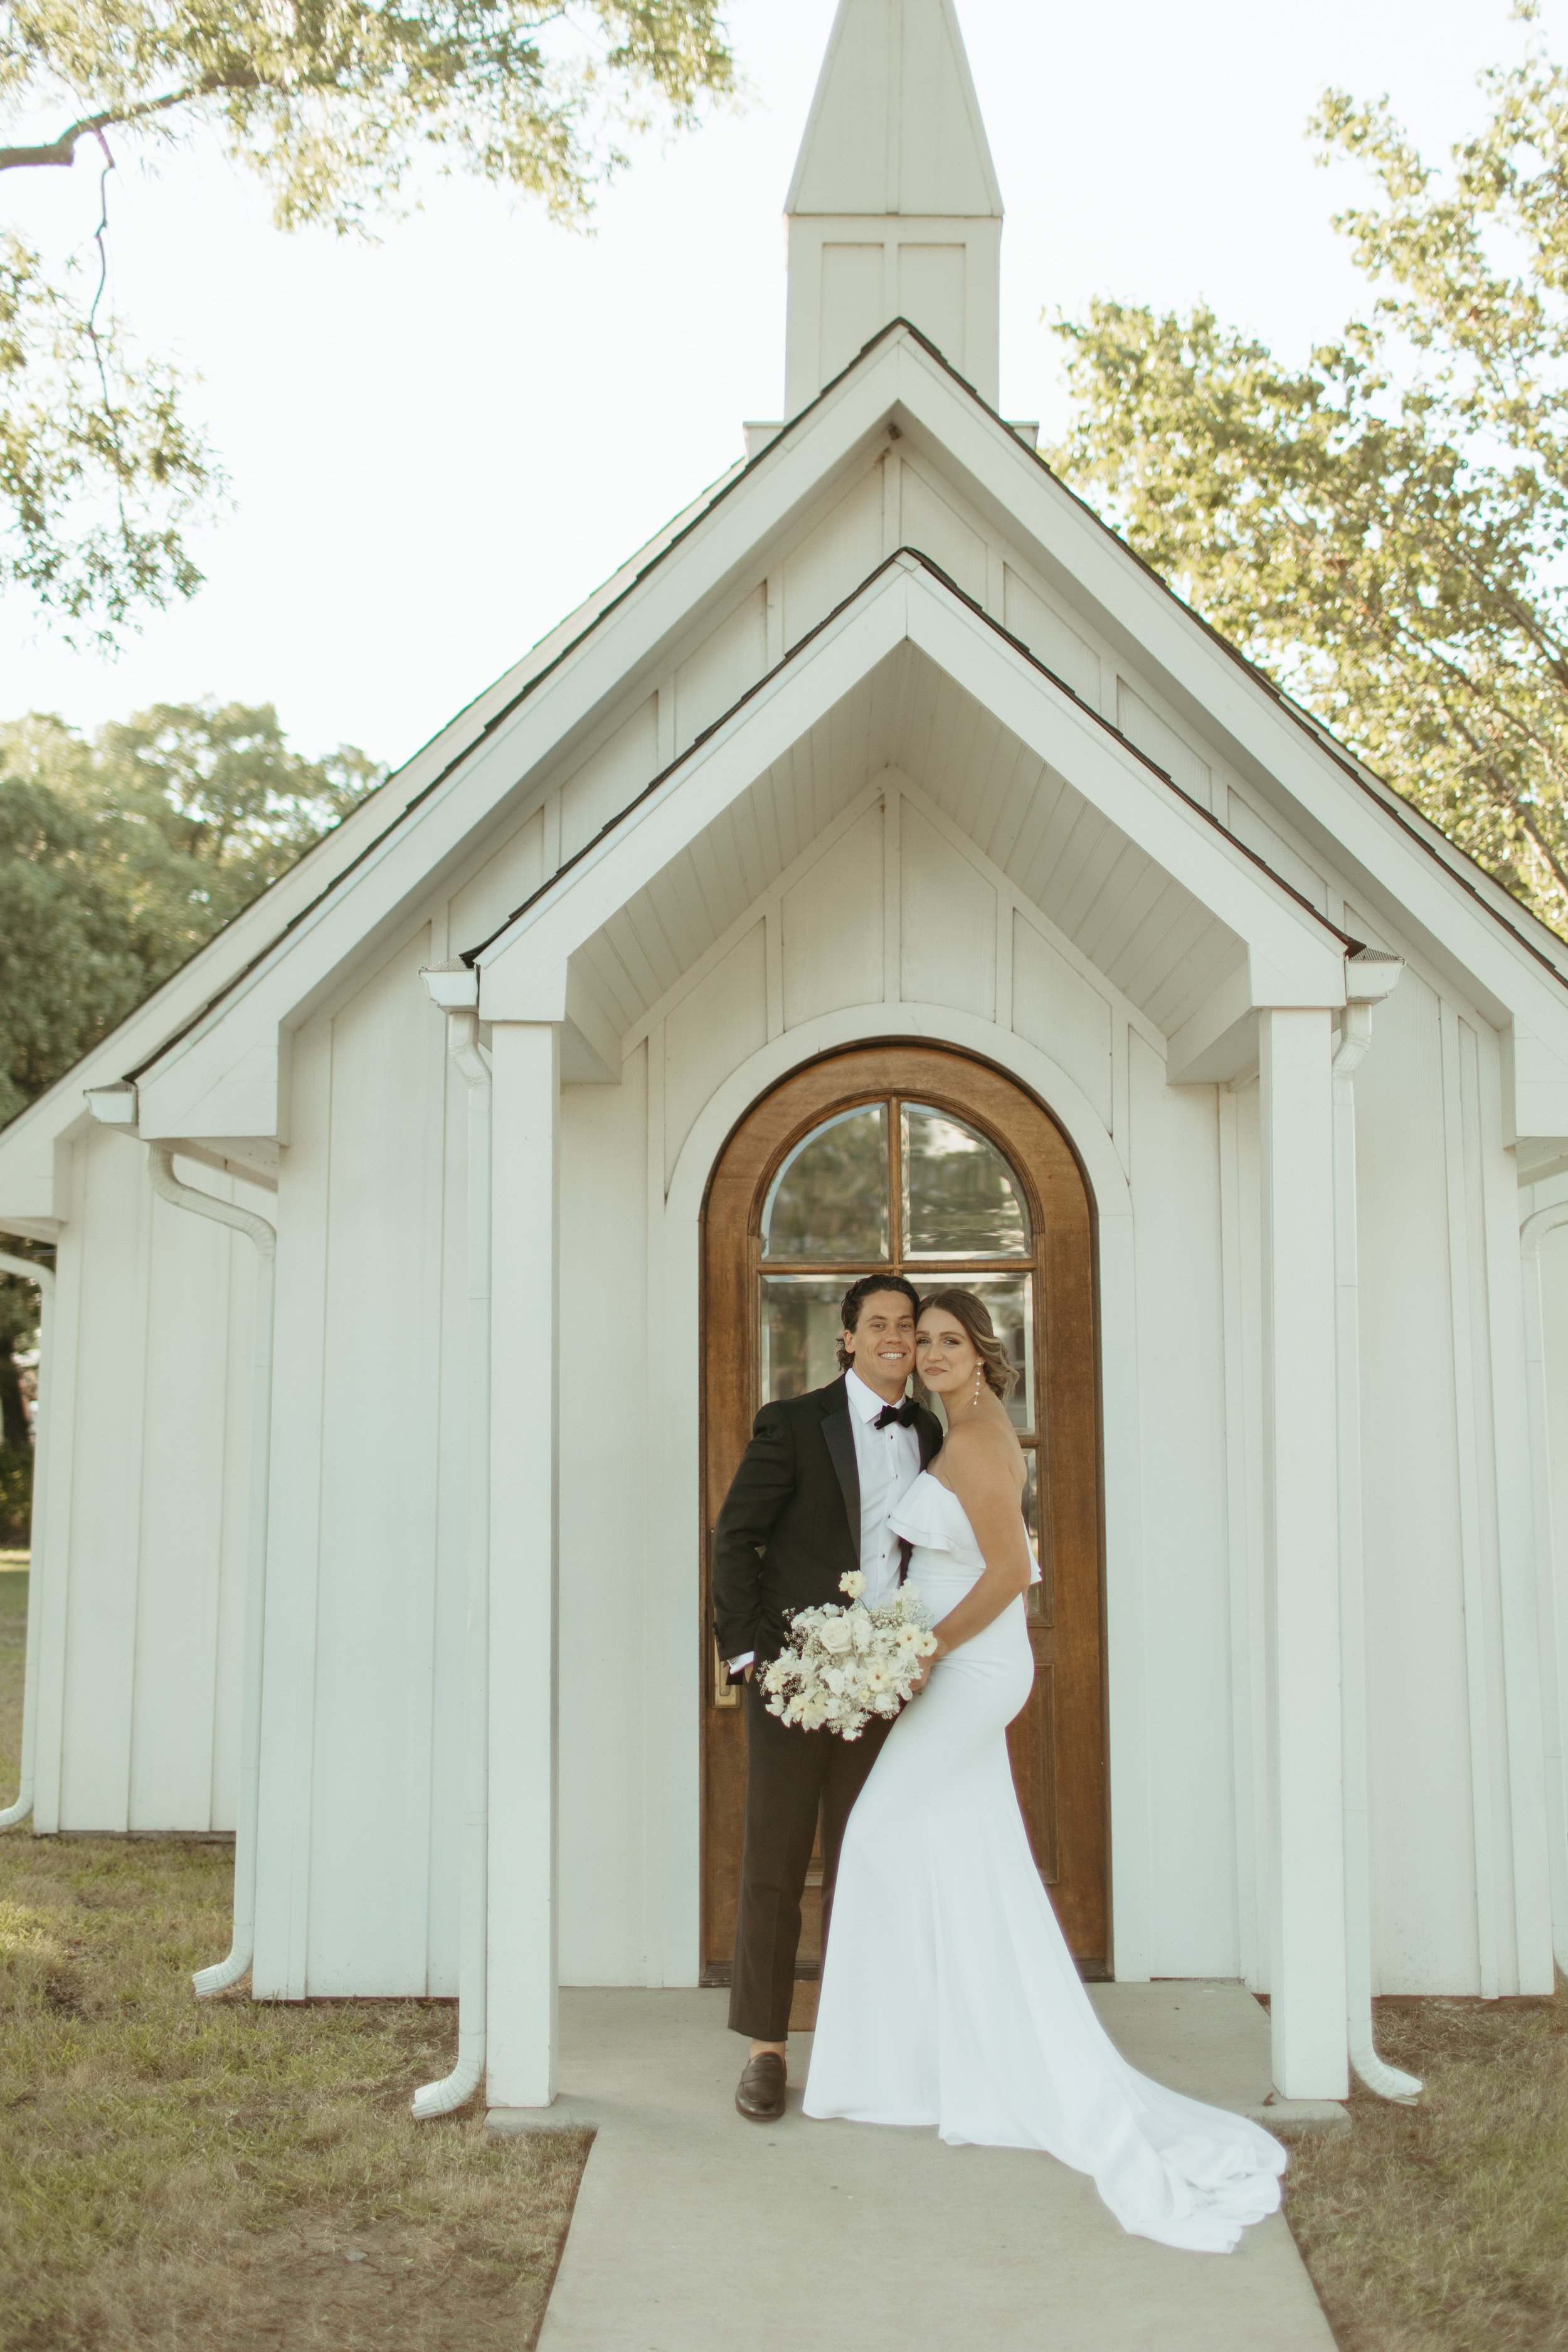 poppy-alyssa-kristin-wedding-dress-at-the-emerson-venue-texas-kyra-nowl-photography_14.jpg